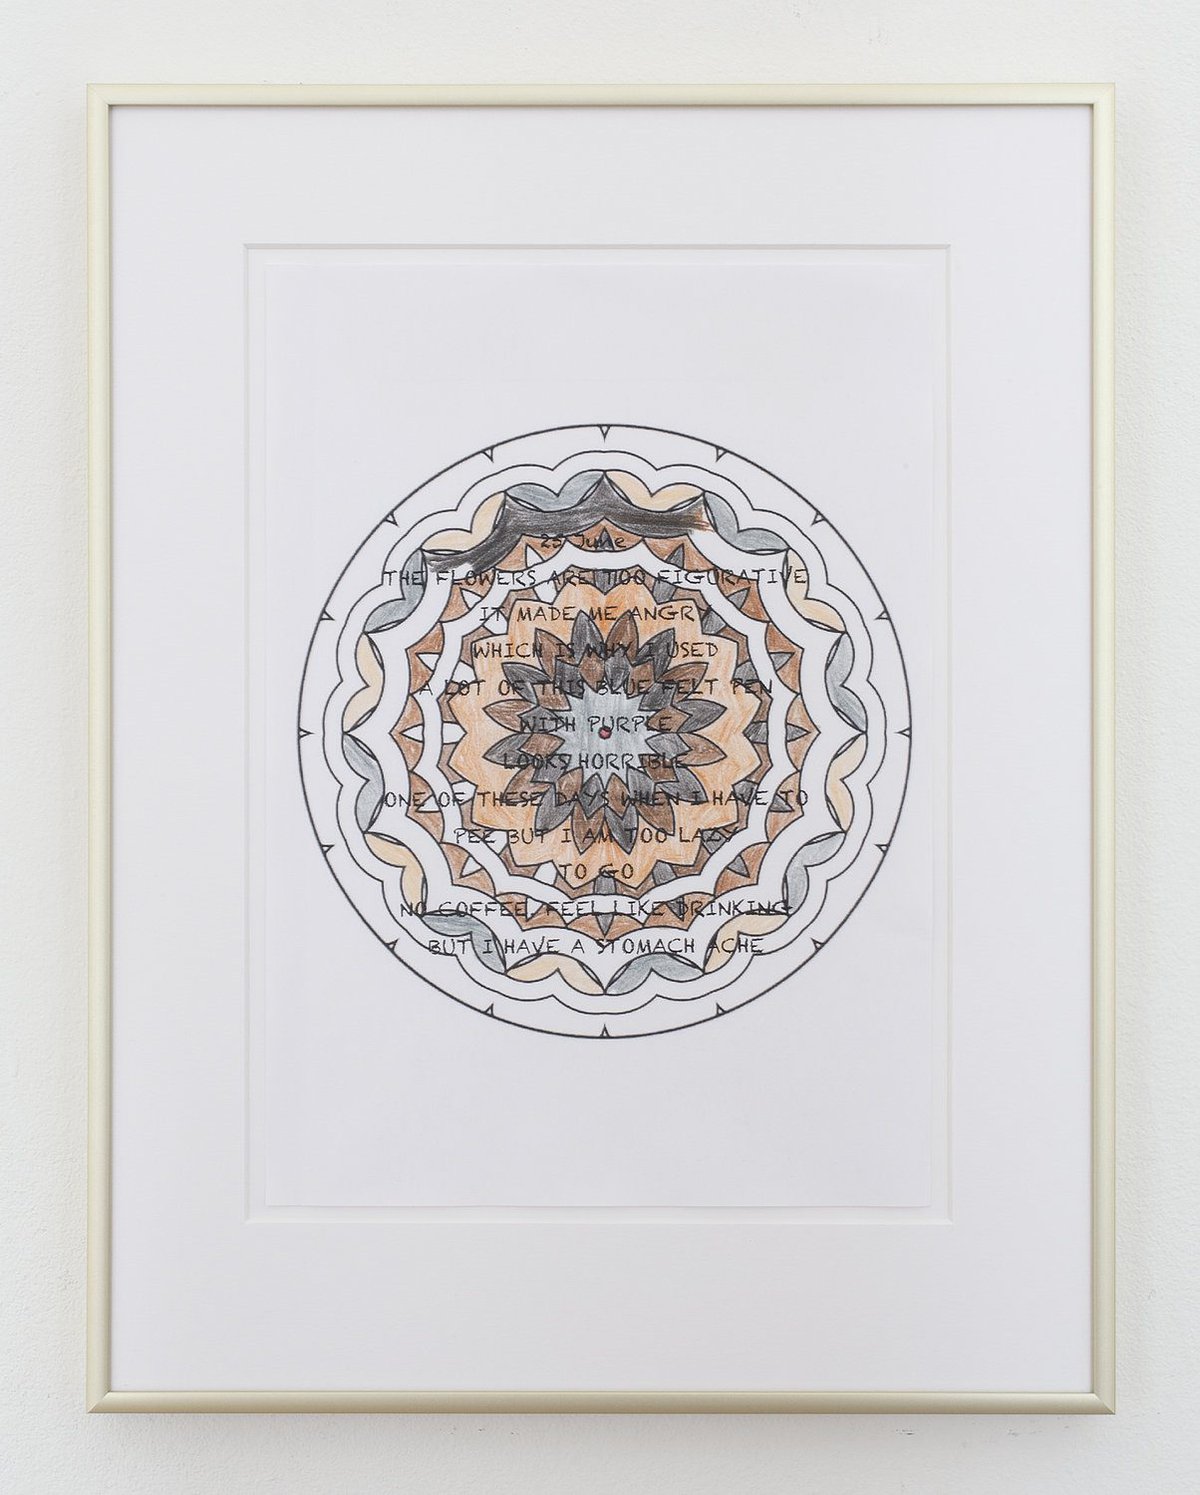 Anna-Sophie Berger, 25th june, 2015Highlighter, pencil, inkjet print on paper40 x 30 cm